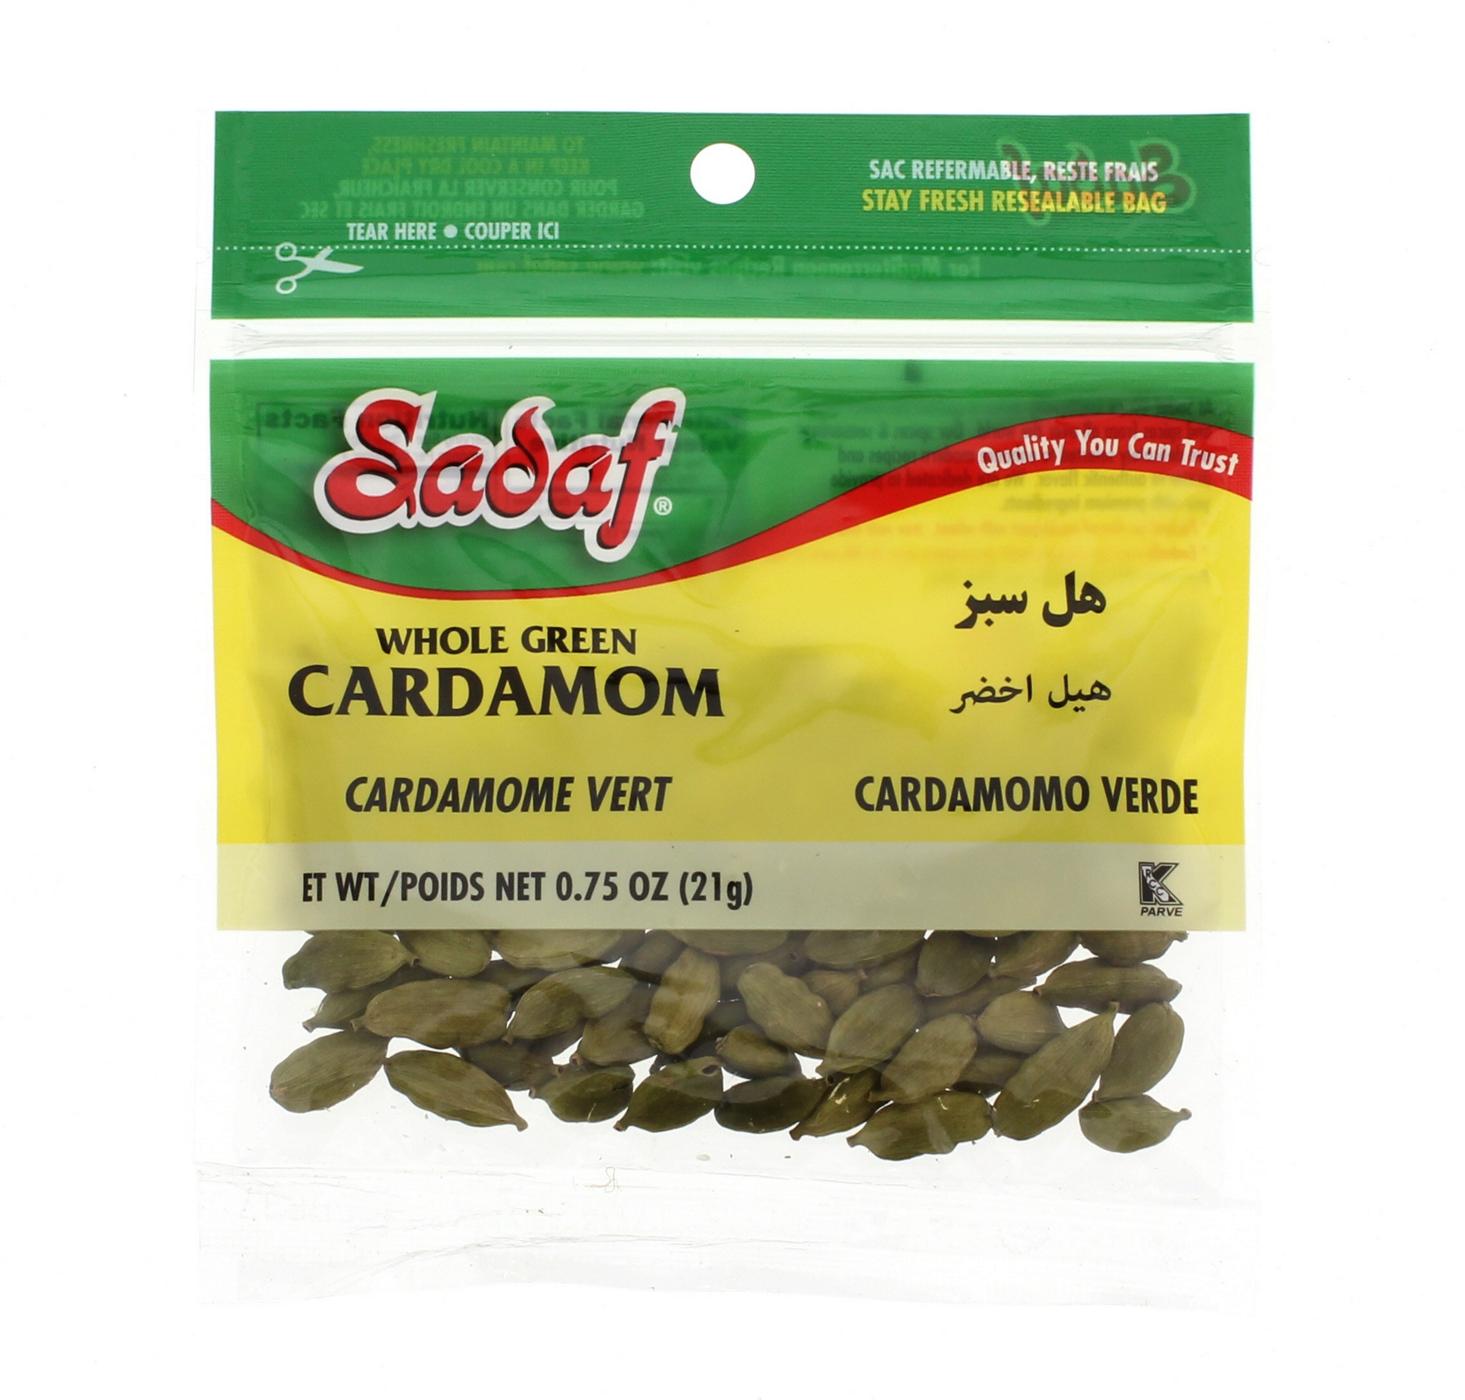 Sadaf Whole Green Cardamon; image 1 of 2